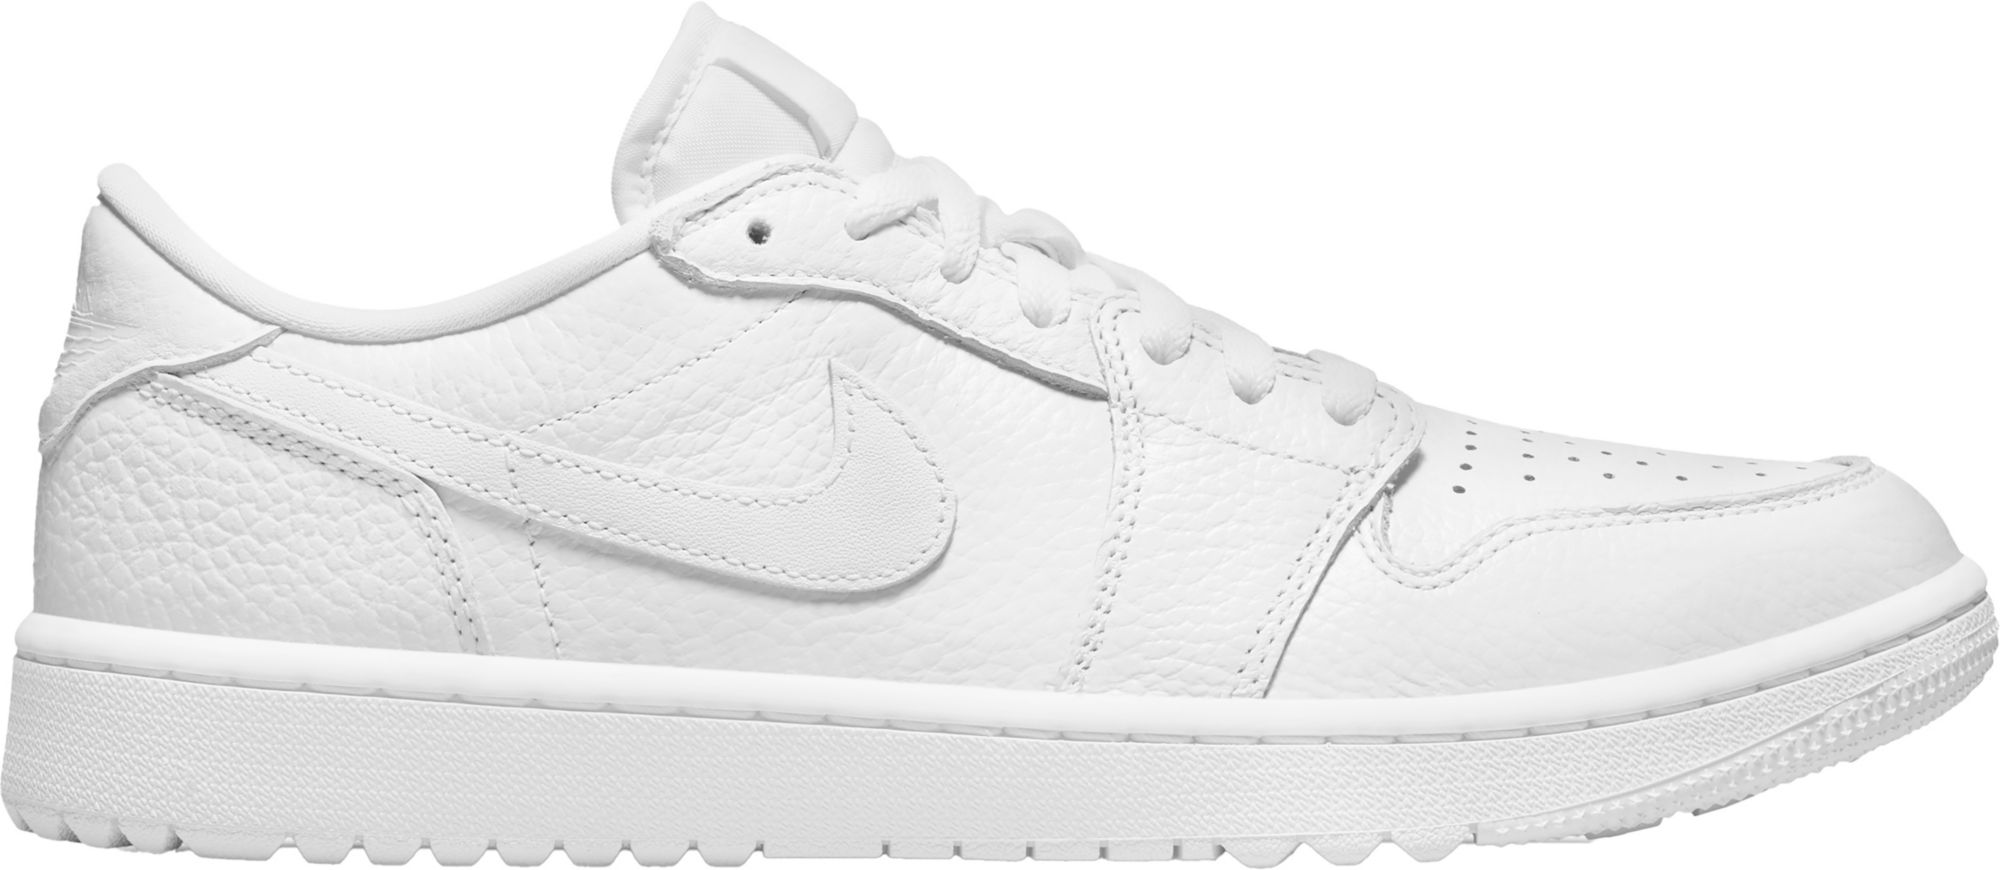 Jordan 1 Low golf shoes in white